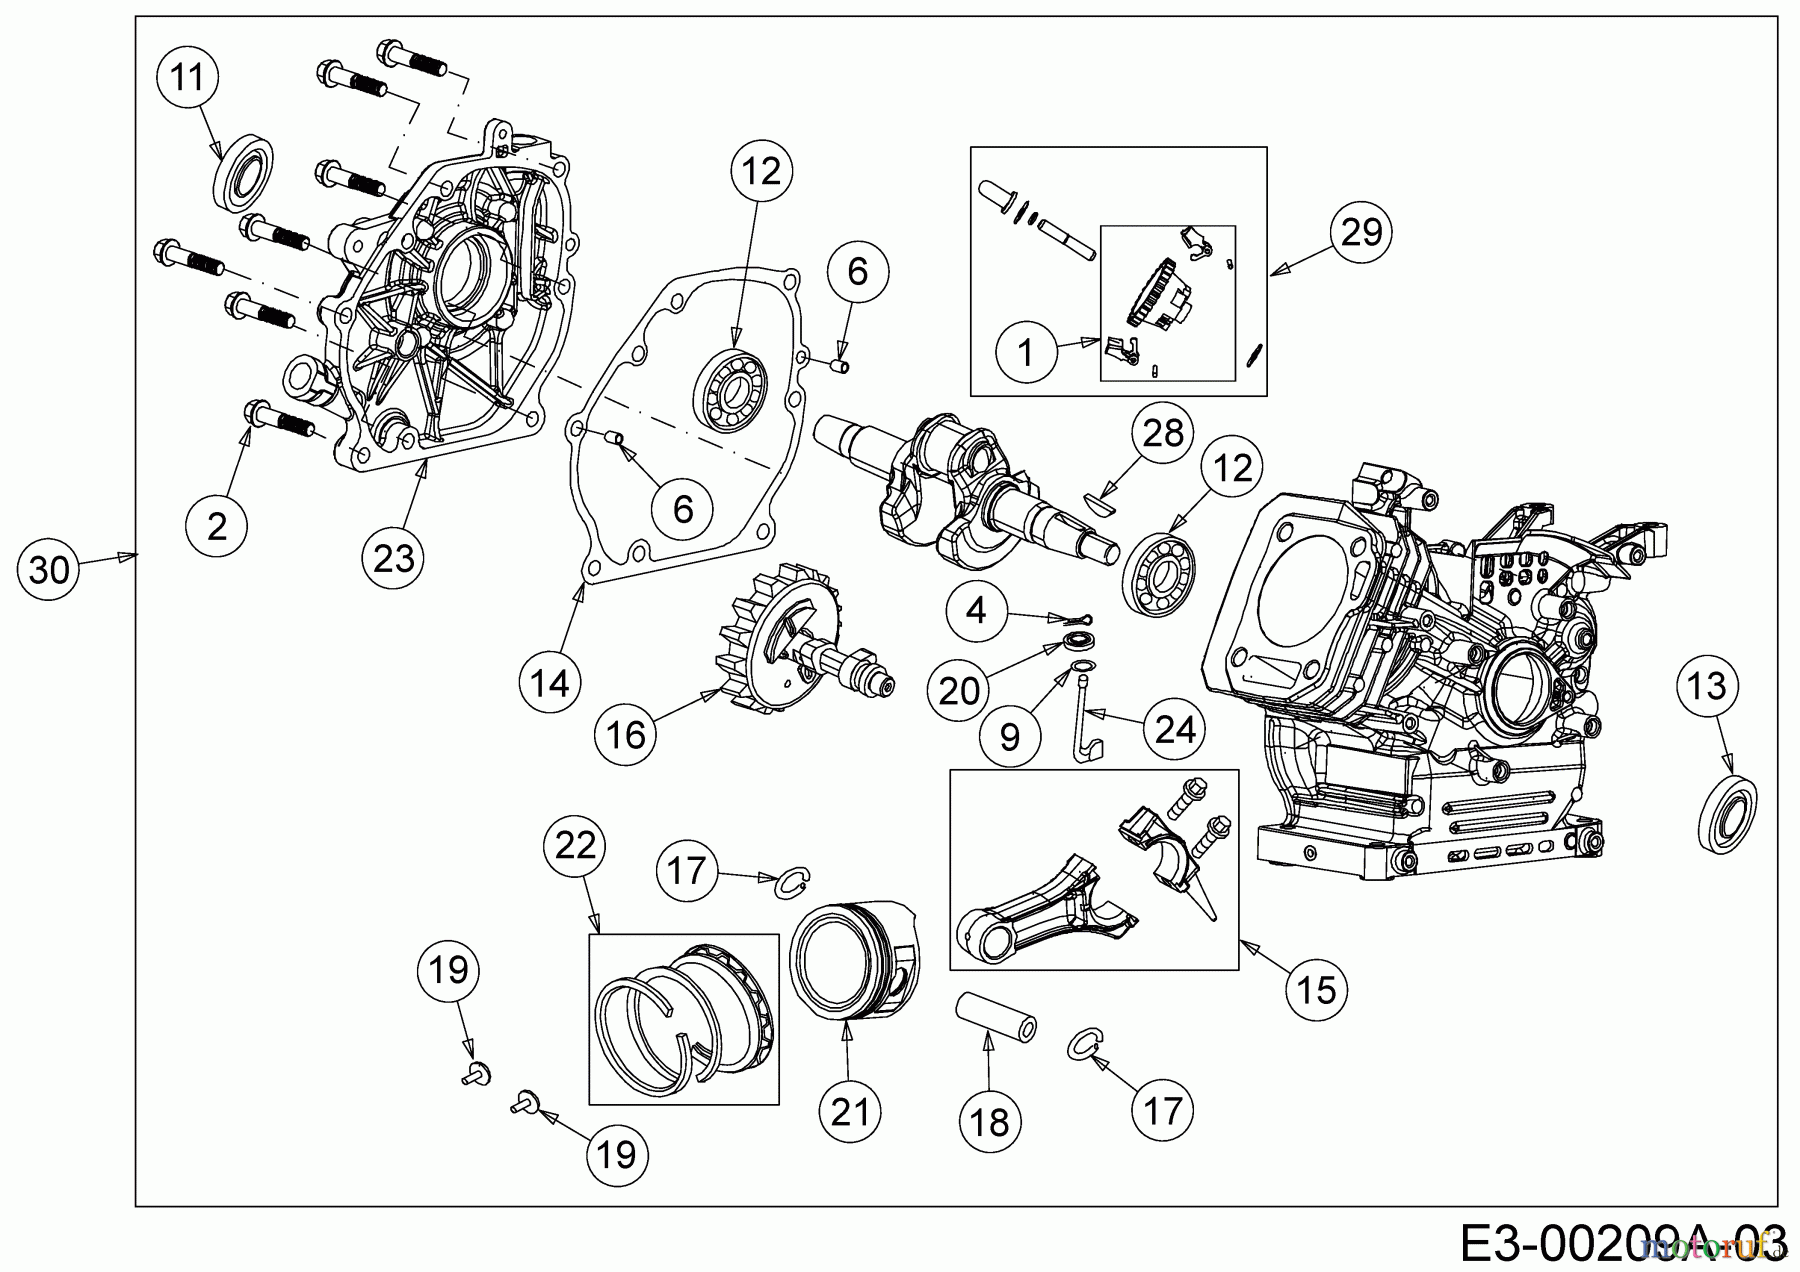  MTD-Engines Horizontal 370-JHA 752Z370-JHA  (2020) Piston, Camshaft, Crankshaft, Connecting rod